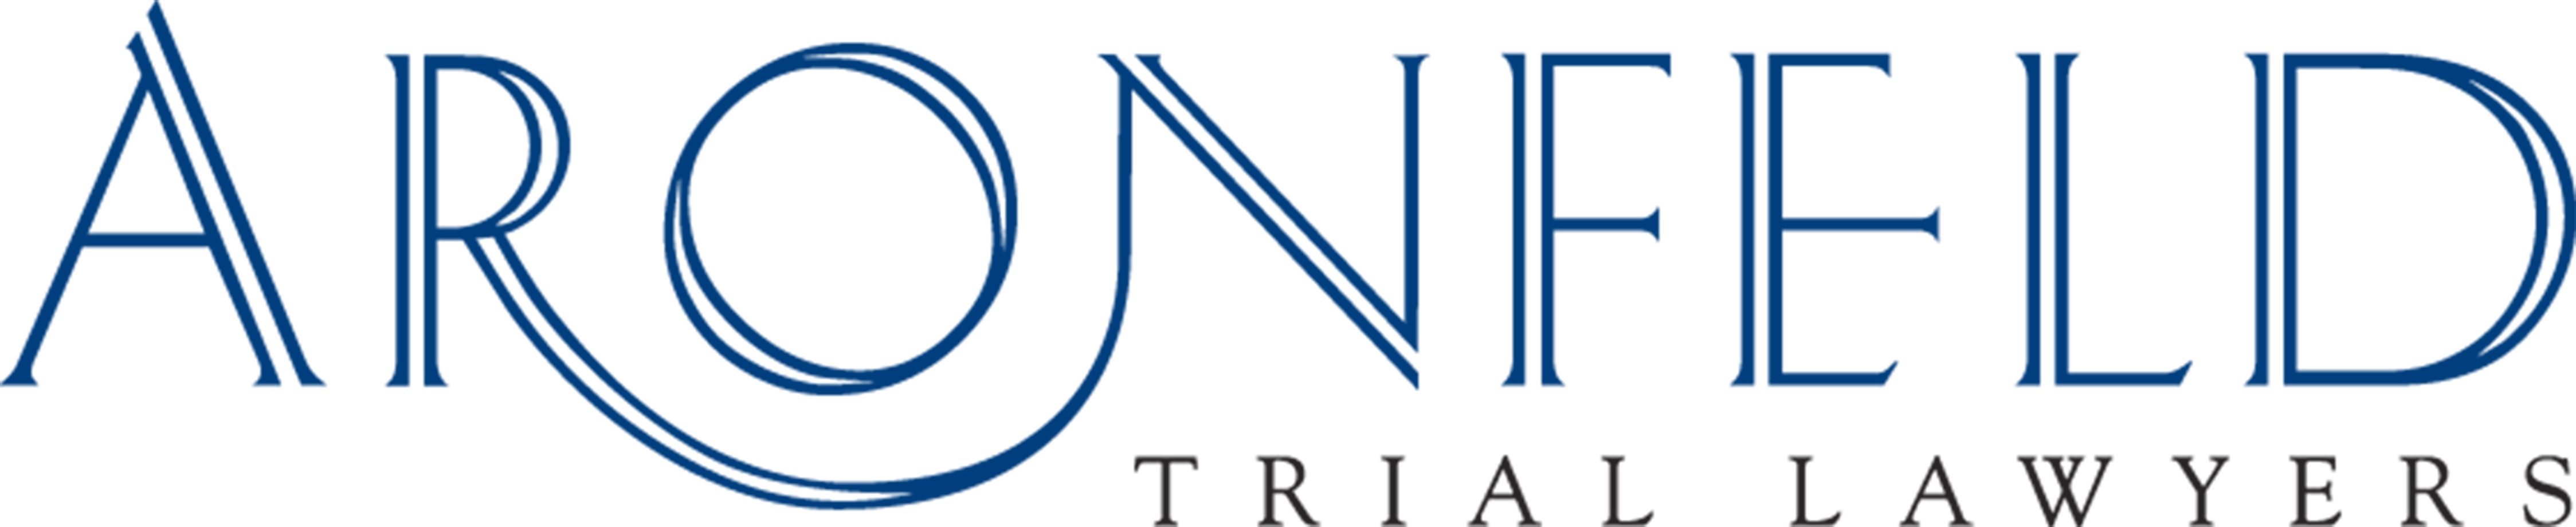 aronfeld blue logo